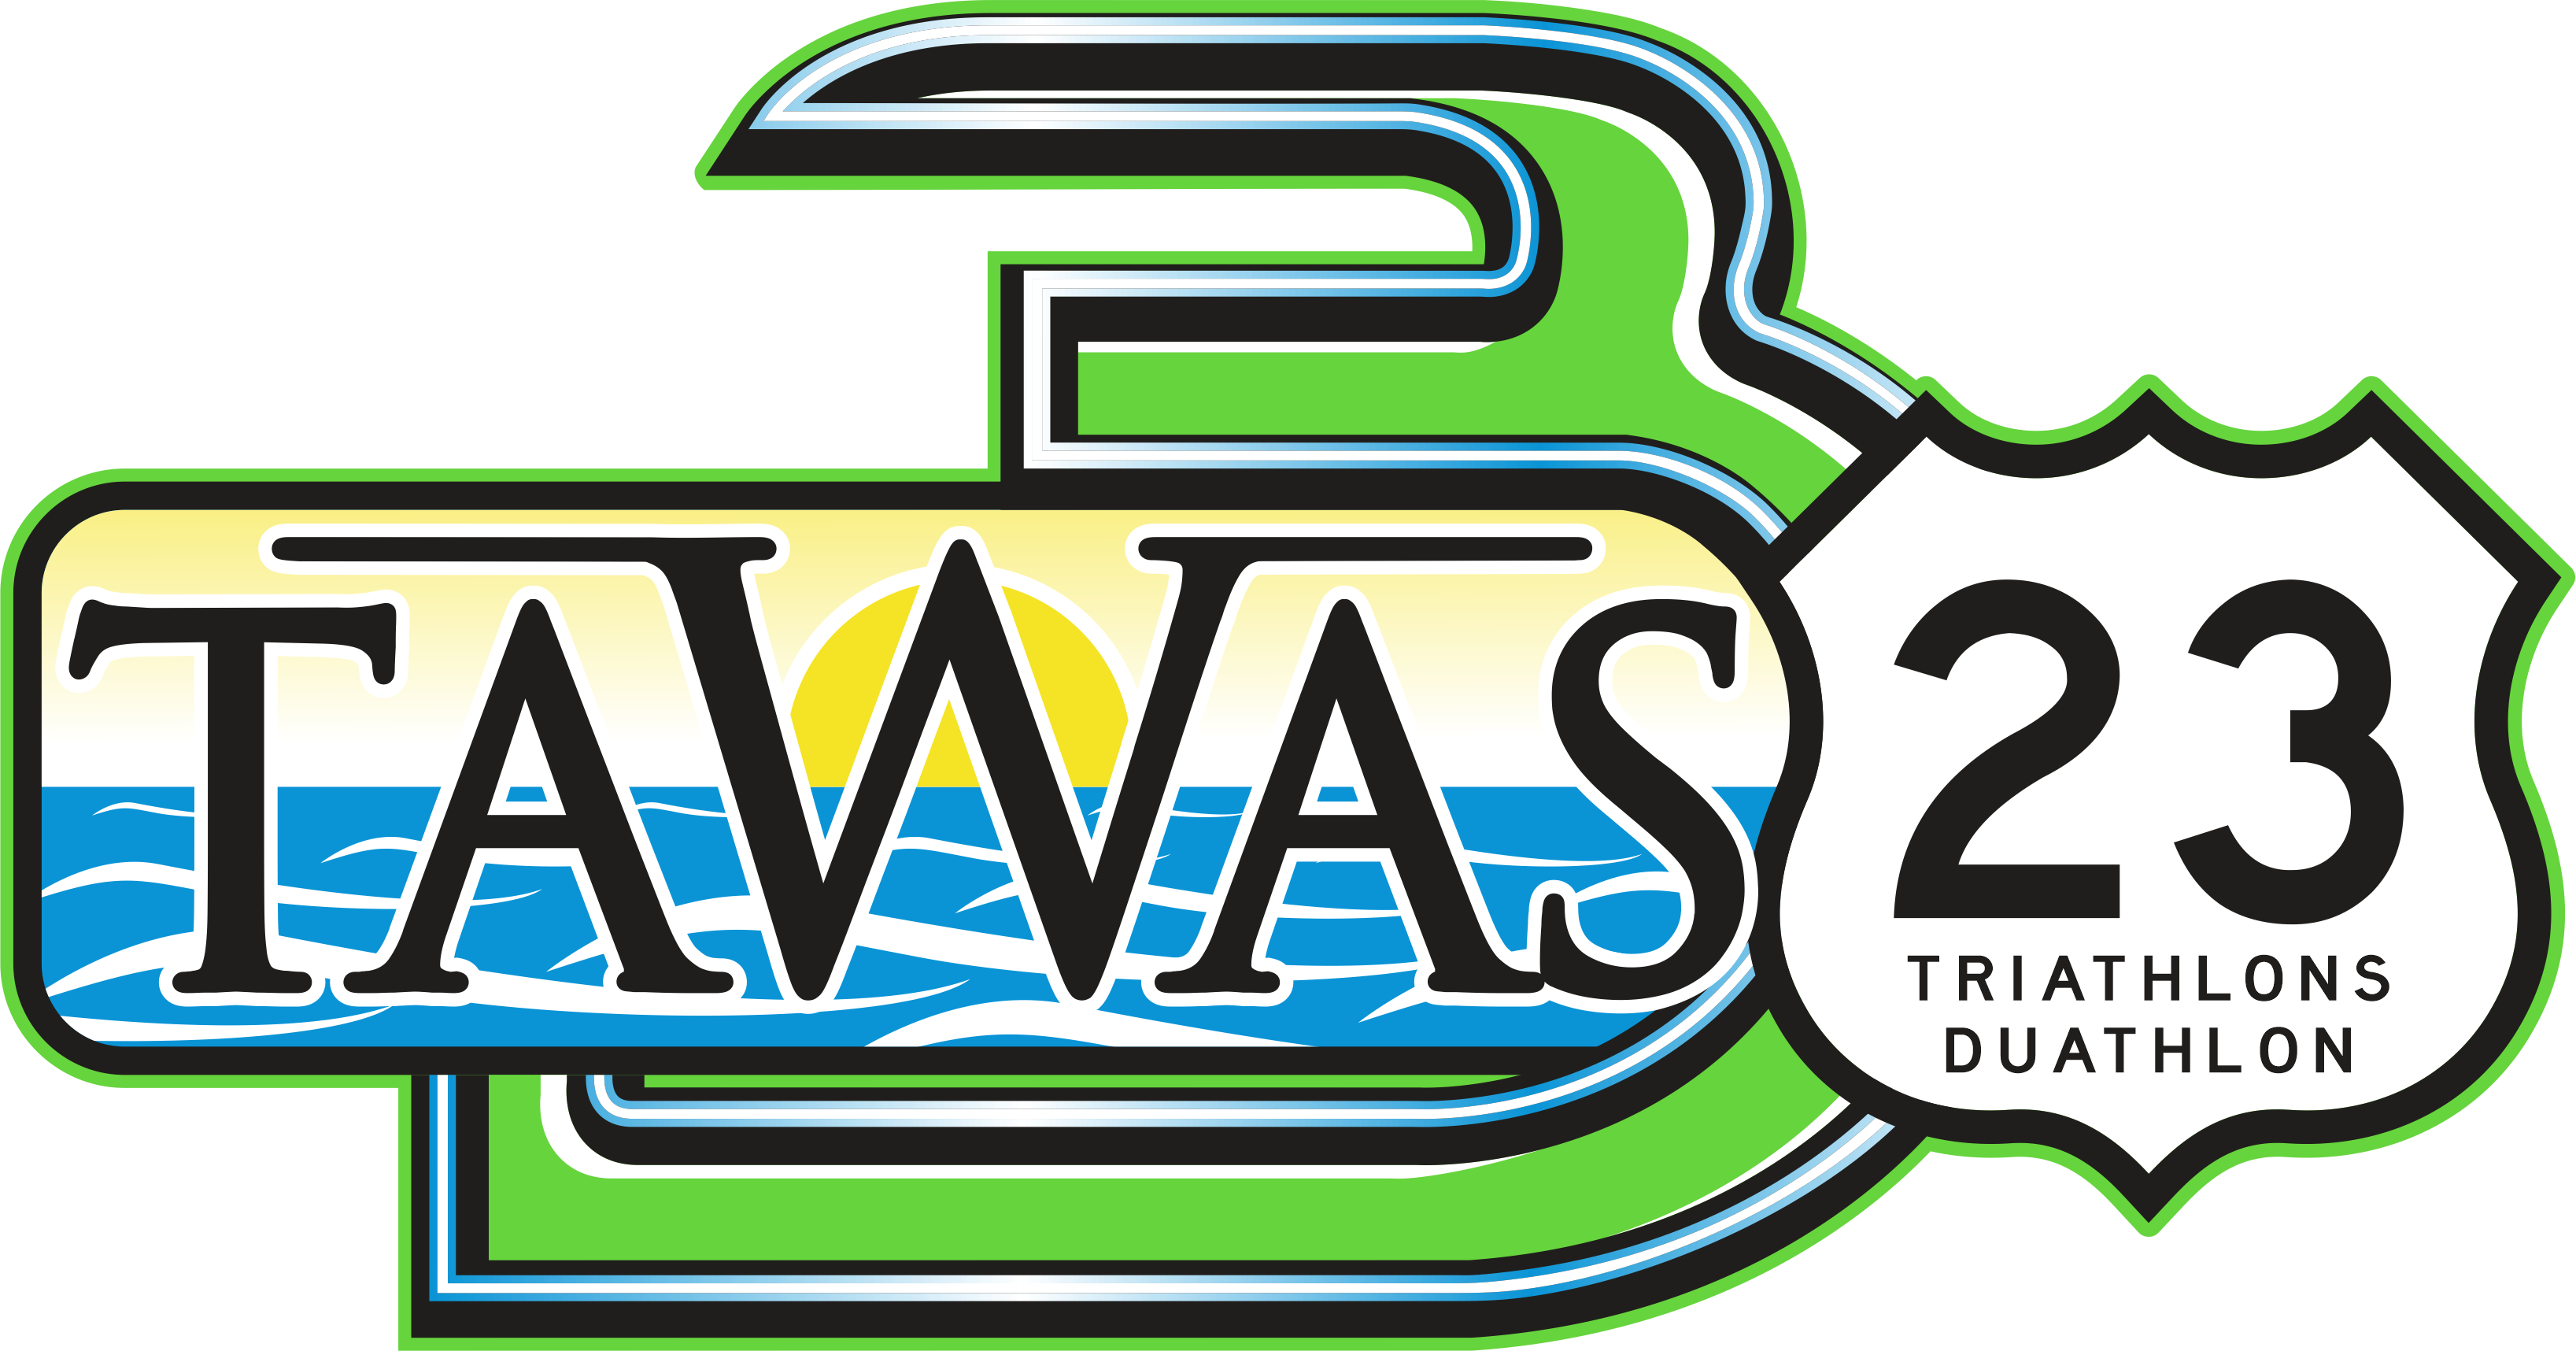 3-Disciplines-Tawas-23-Triathlons-City Rules Information